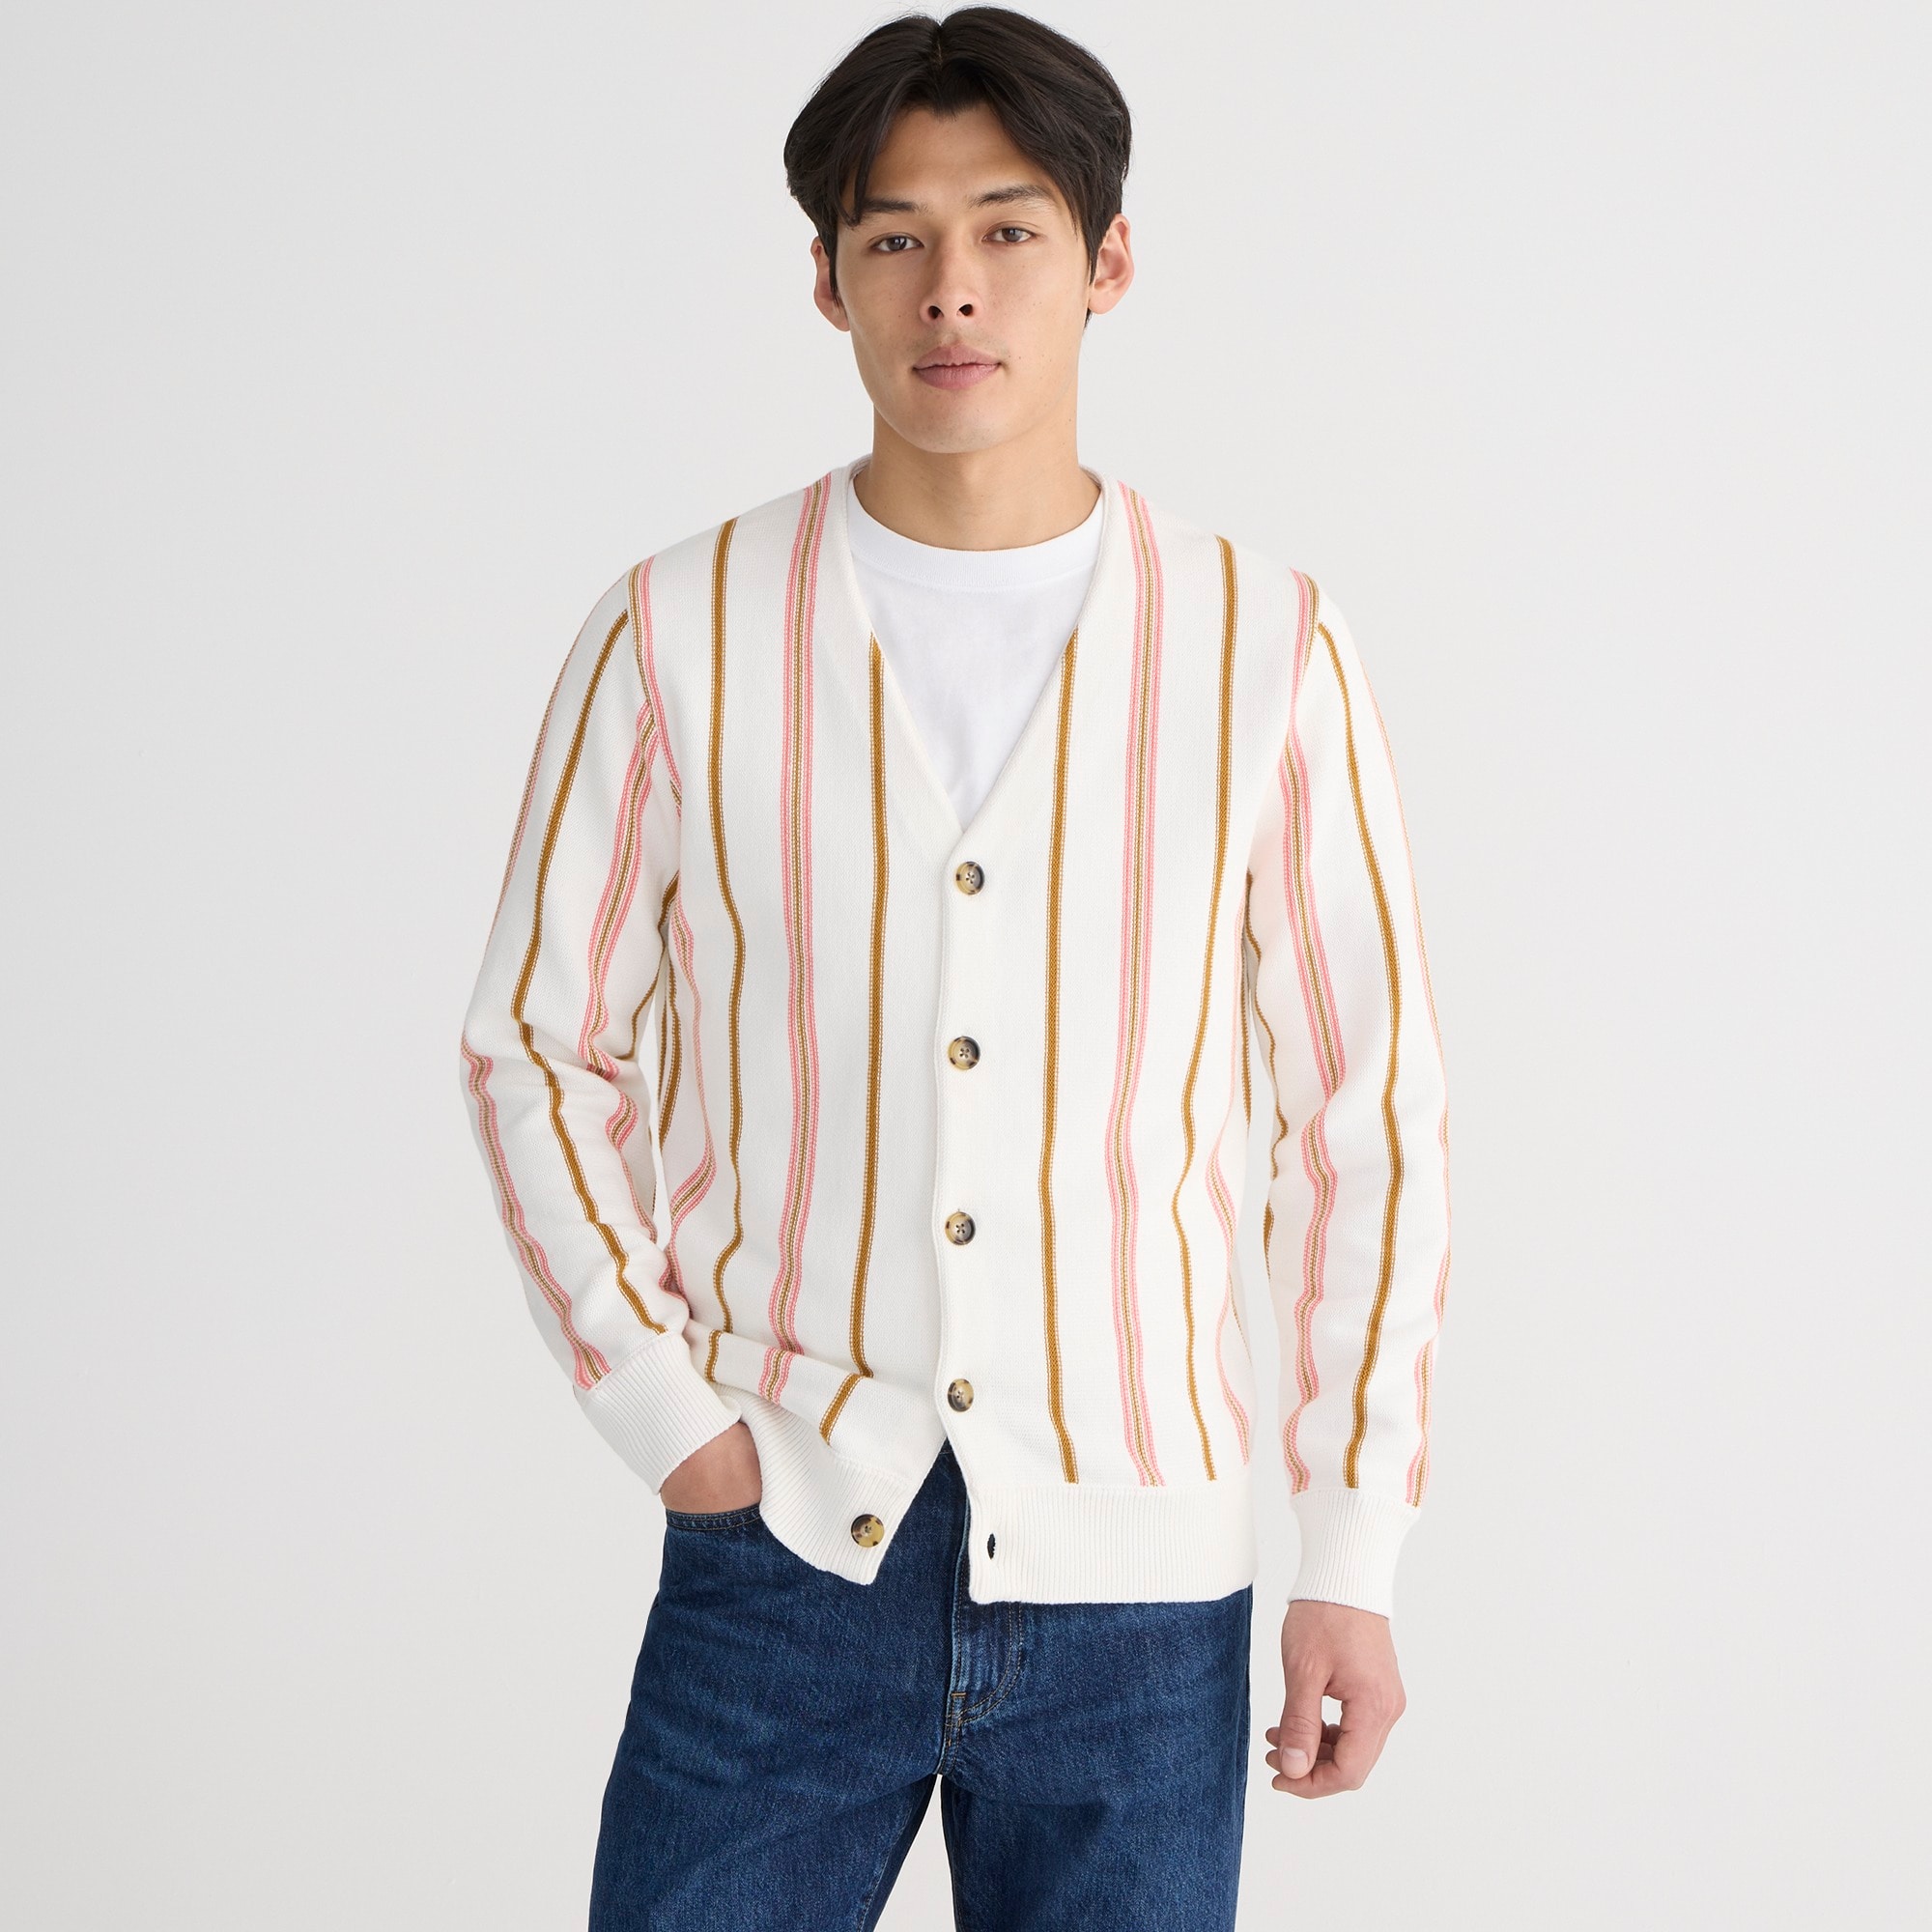 Jcrew Heritage cotton cardigan sweater in stripe